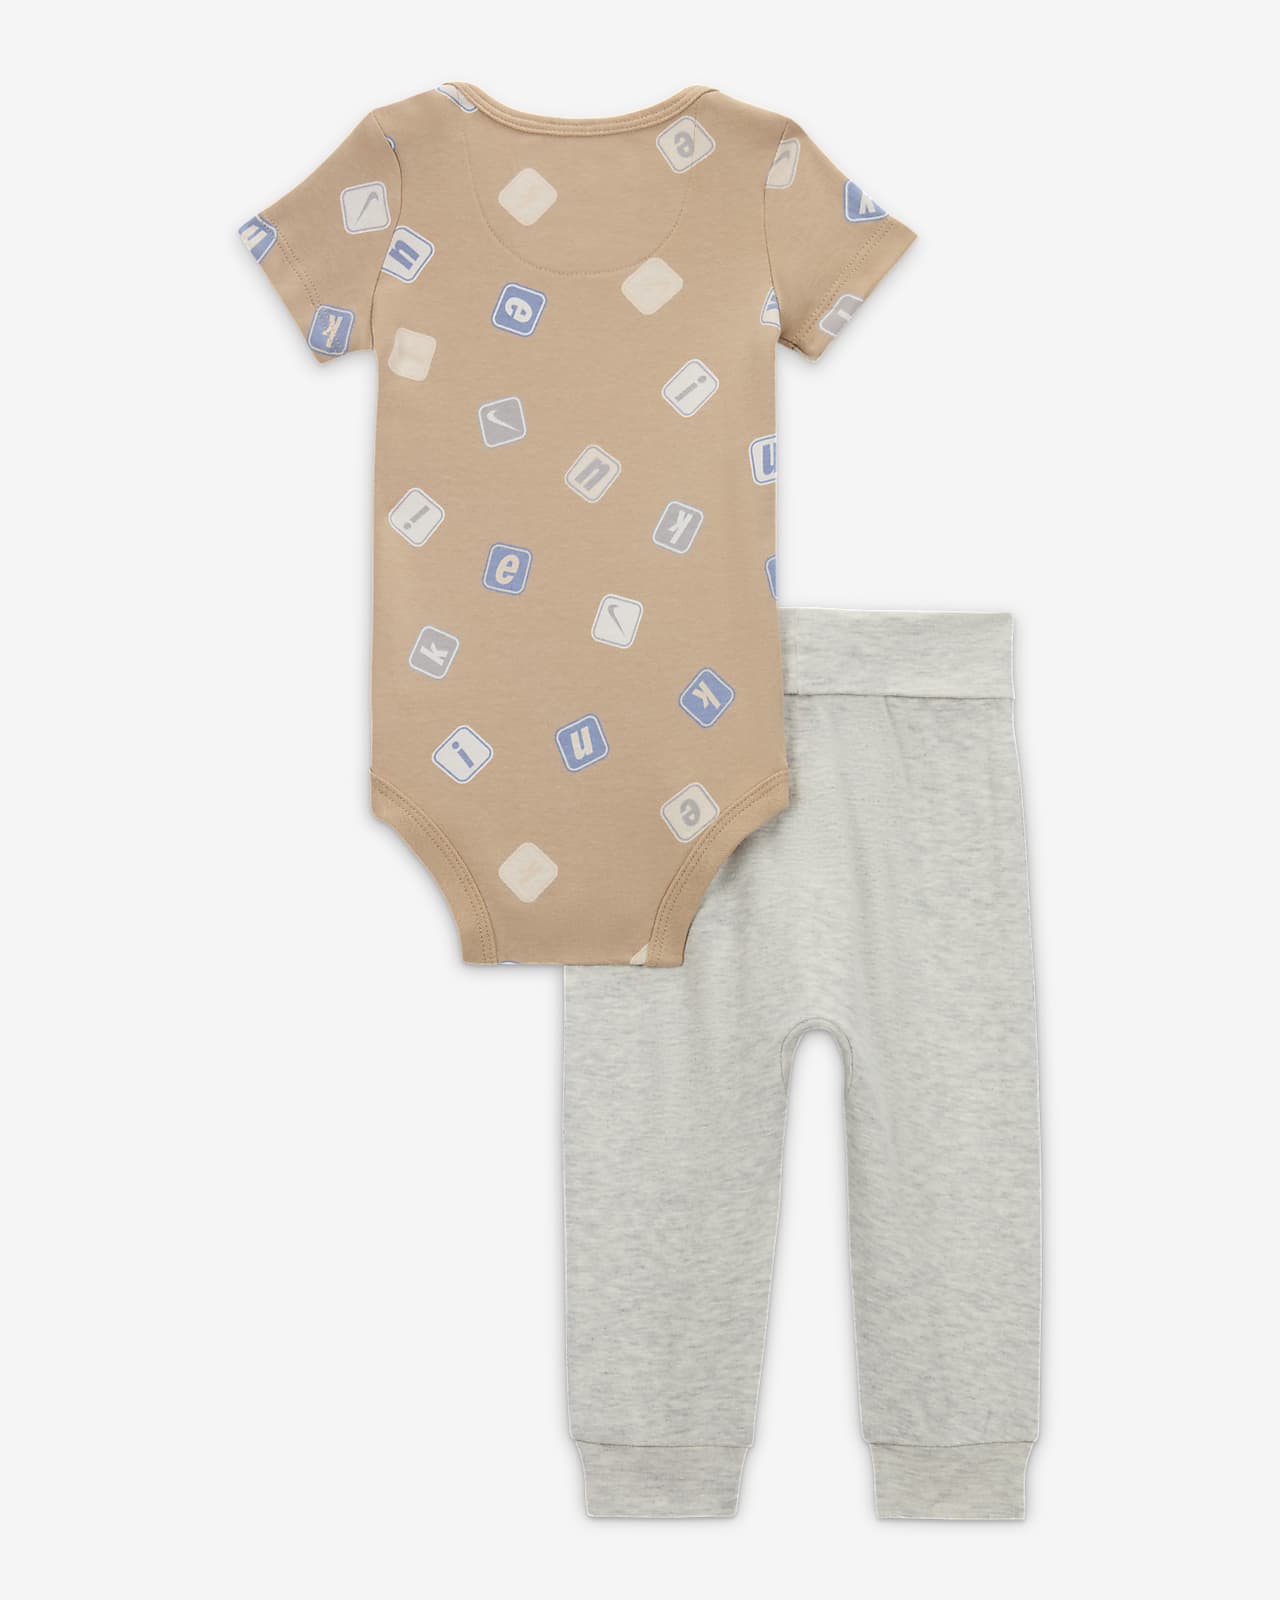 Nike Baby (0-9M) 2-Piece Printed Bodysuit Set.